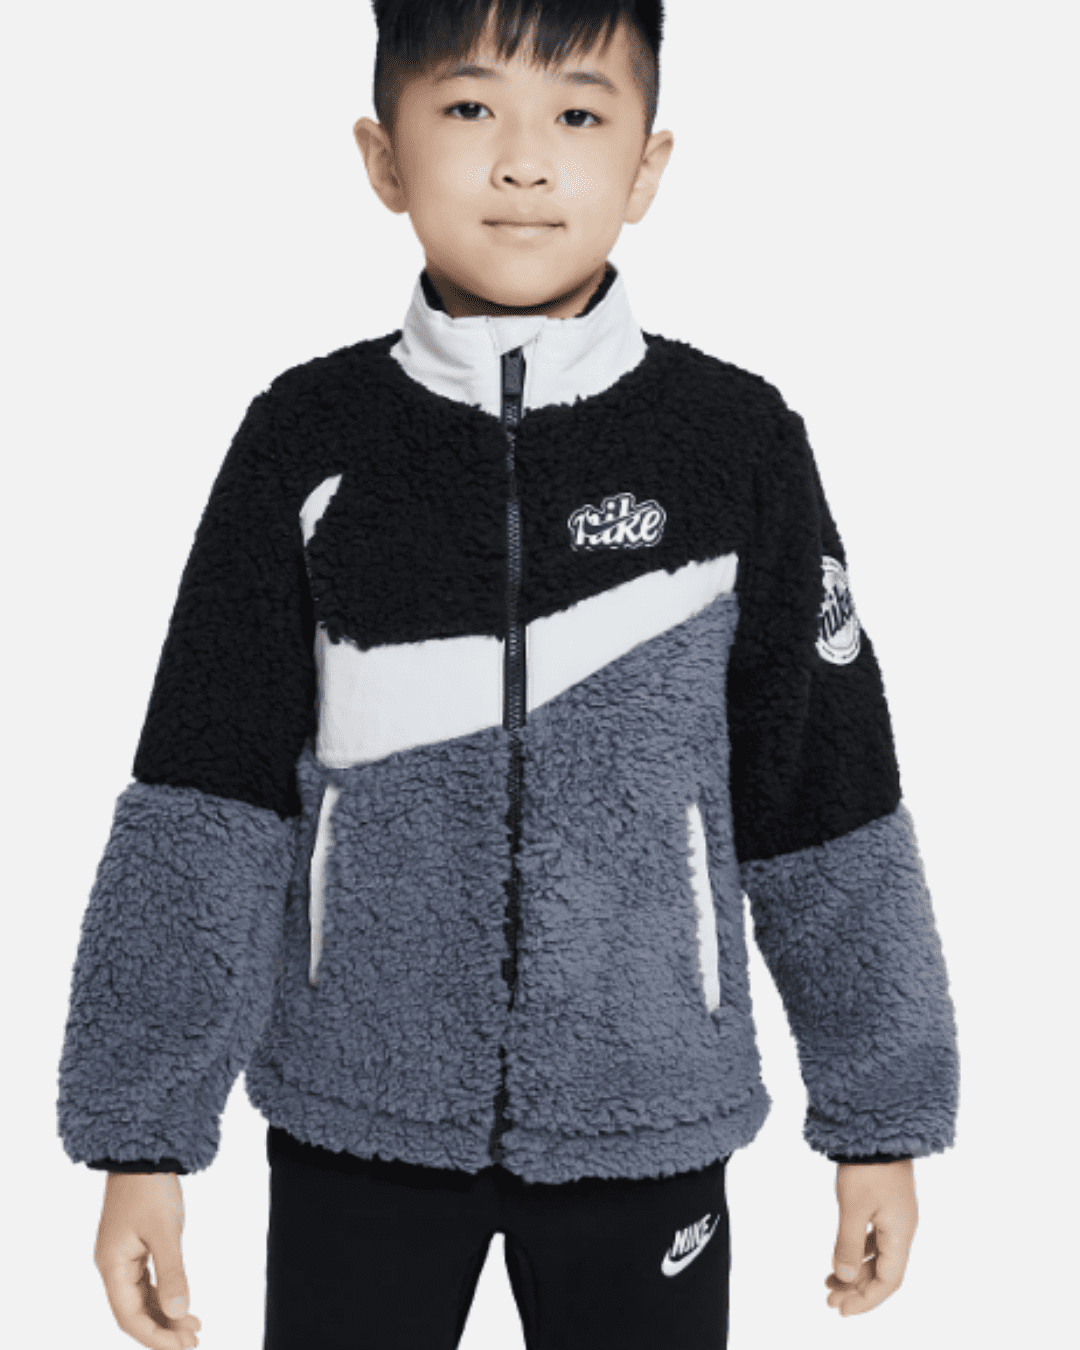 Chaqueta Nike Sherpa Niños - Negro/Gris